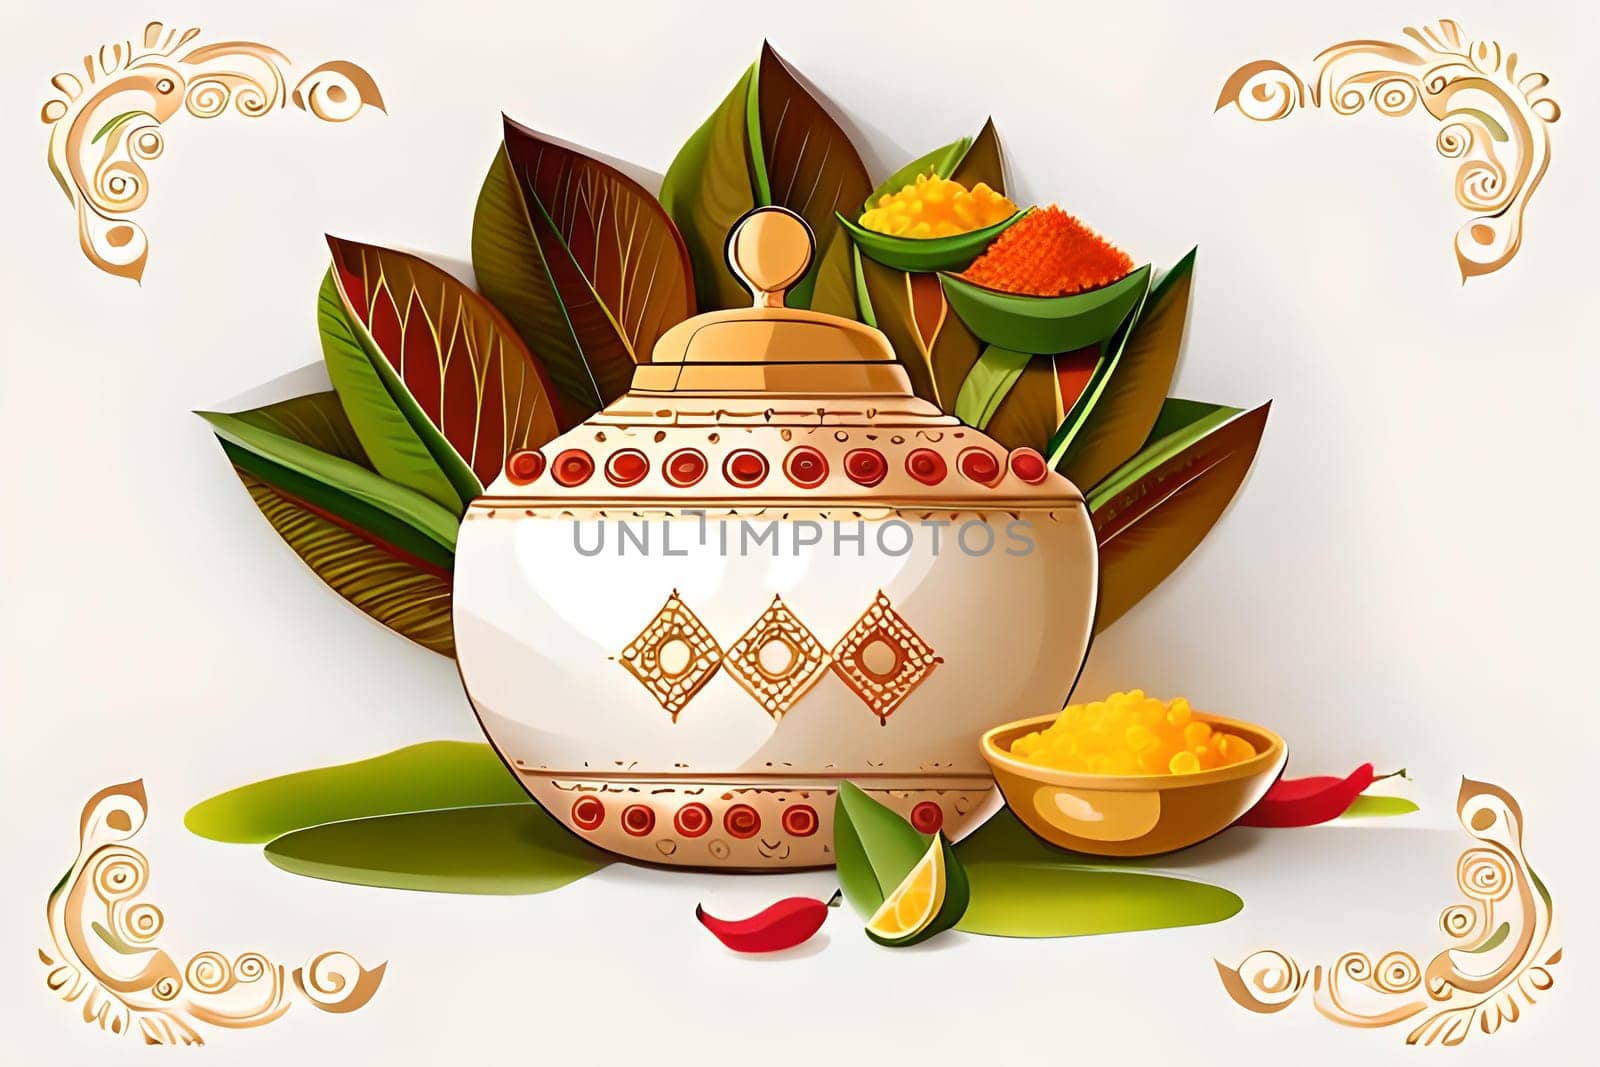 Happy ugadi greeting card background with kalash. Happy Ugadi holiday composition - Hindu New Year festival. Decorated Kalash with coconut, flowers, mango leaves and diya.